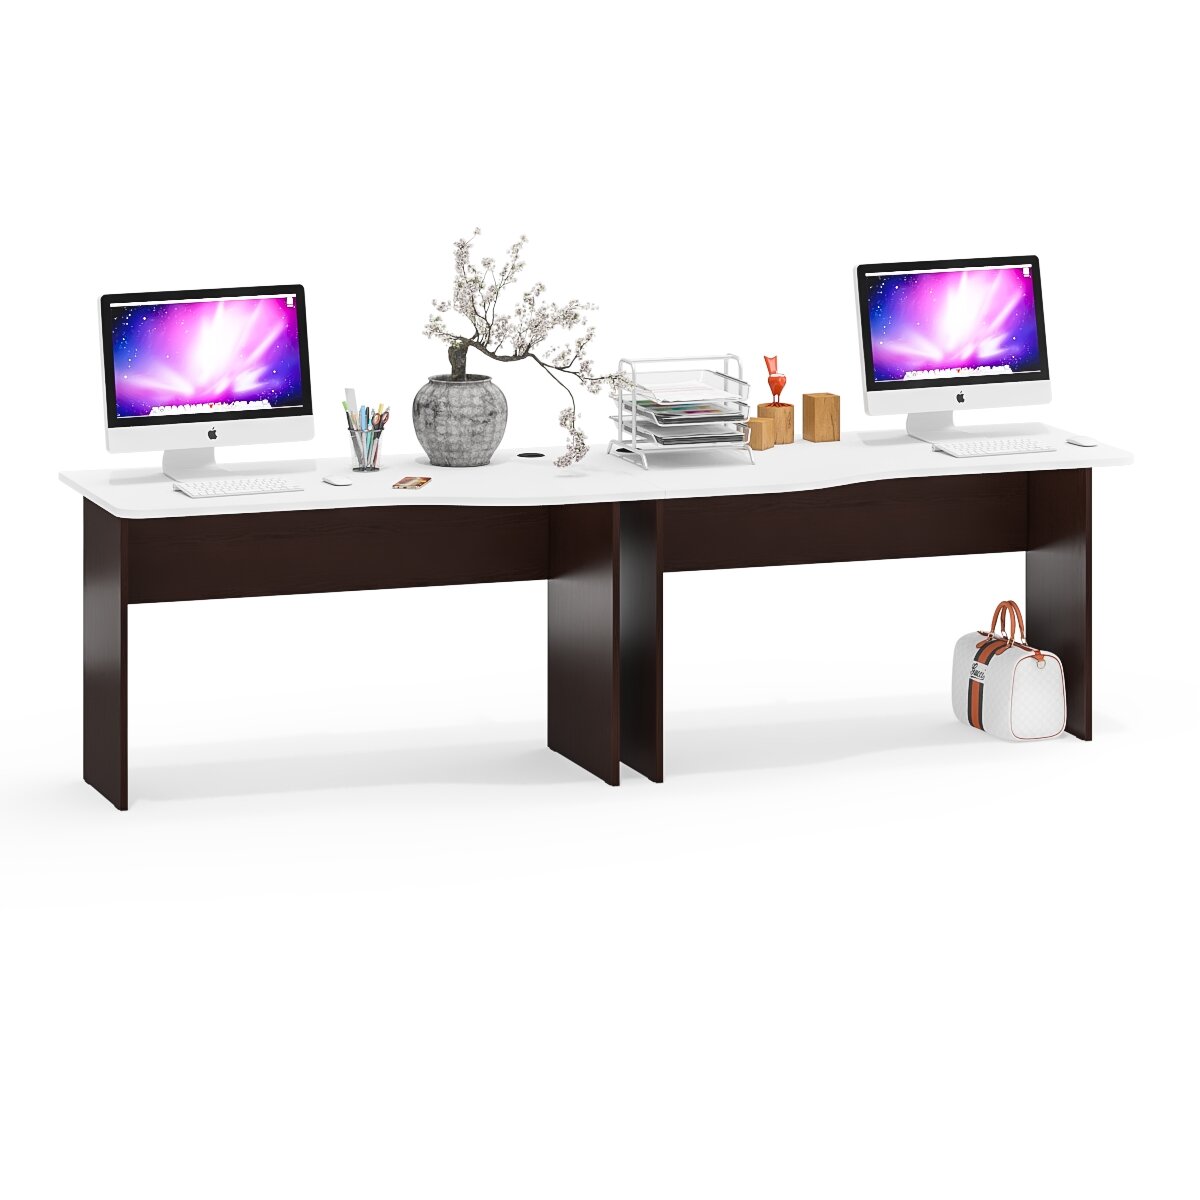 Два письменных стола Мебельный Двор МД 1.04 цвет белый шагрень ШхГхВ 260х75х74 см